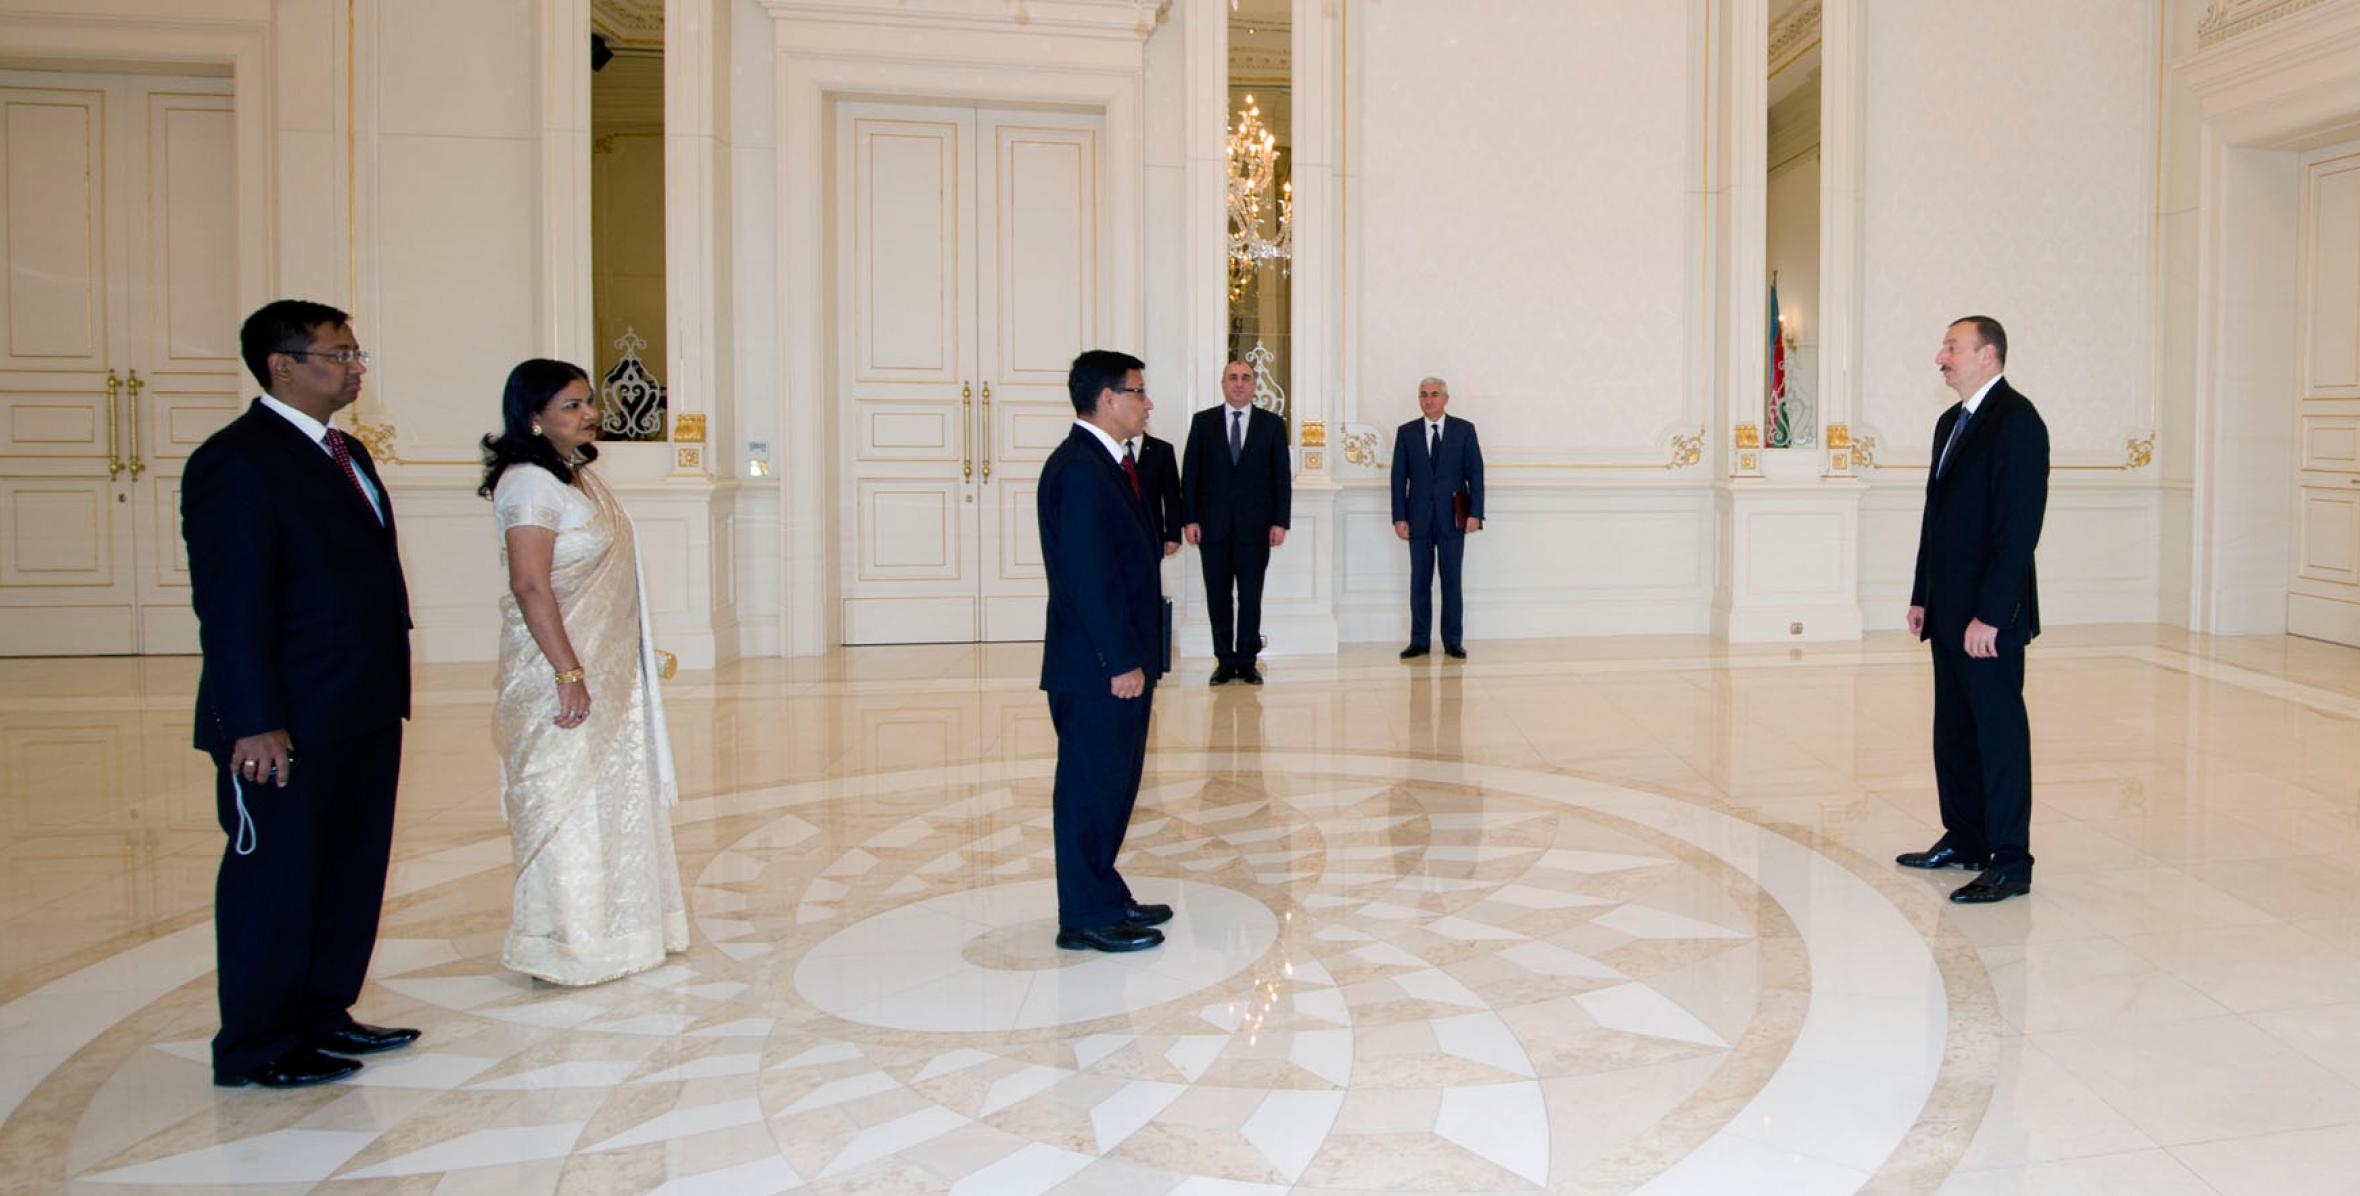 Ilham Aliyev accepted the credentials of the Ambassador of Bangladesh to Azerbaijan, Mr. Zulfigur Rahman